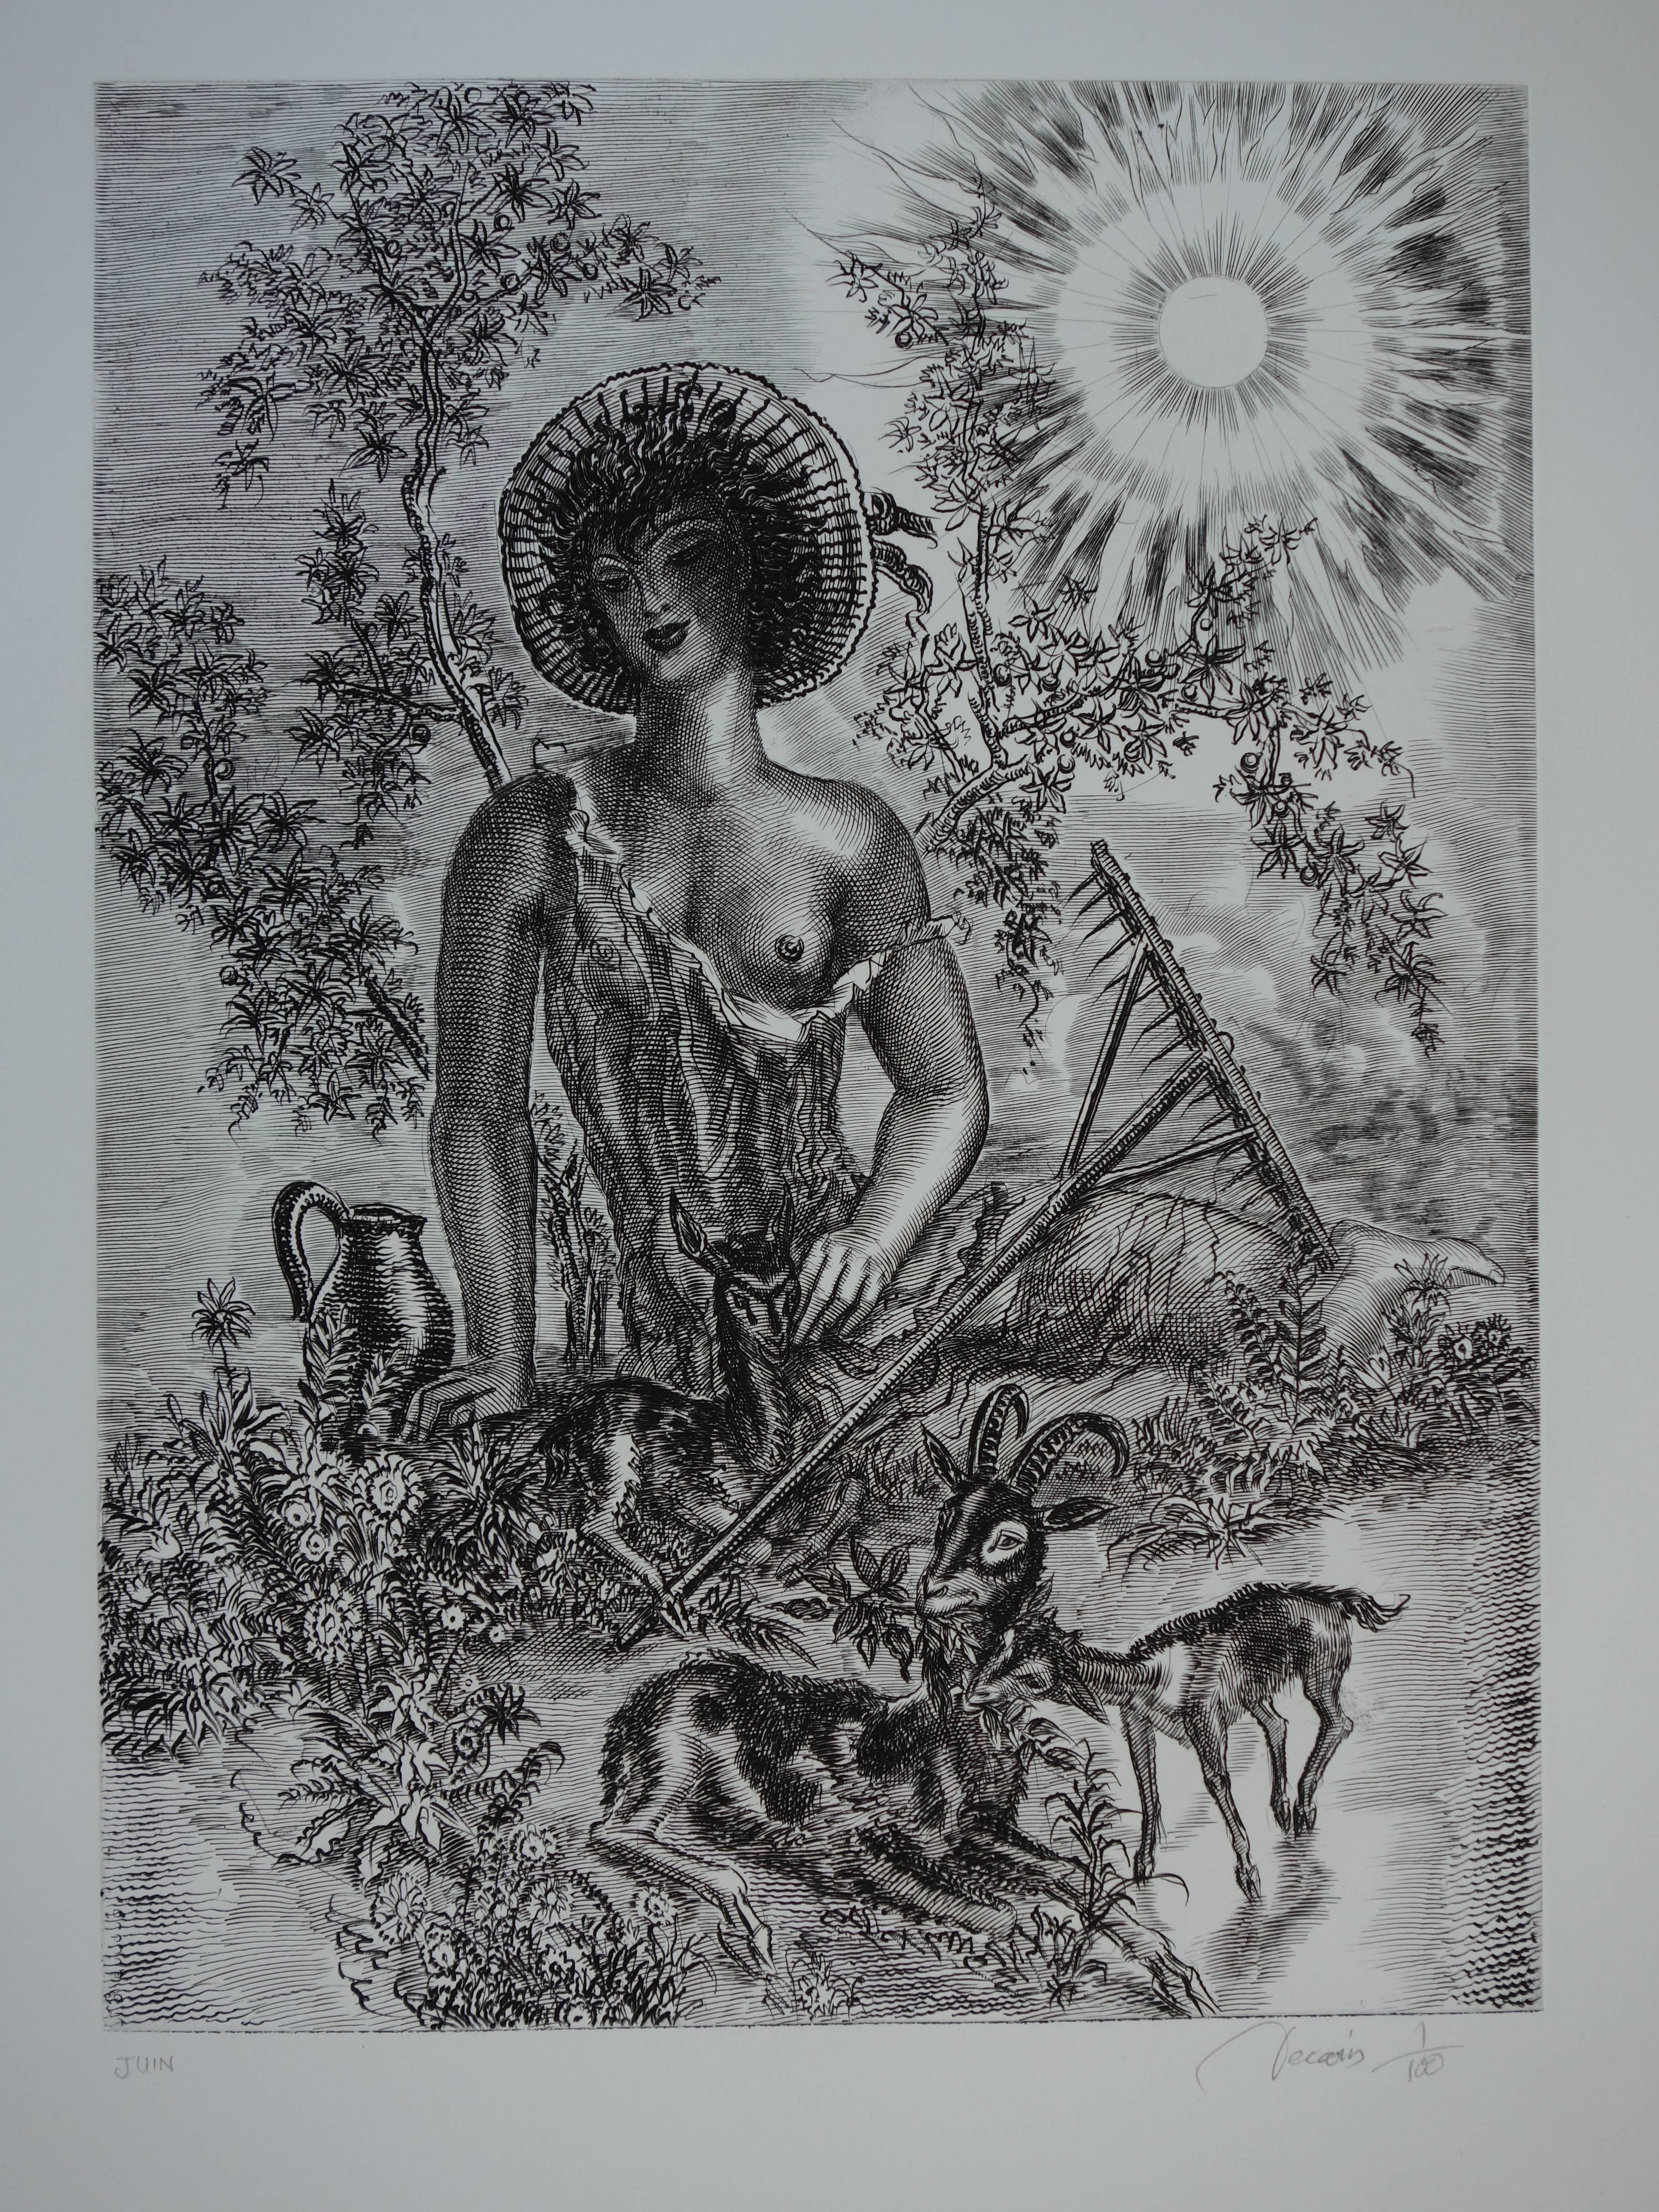 June : the Shepherd - Original handsigned etching - Exceptional n° 1/100